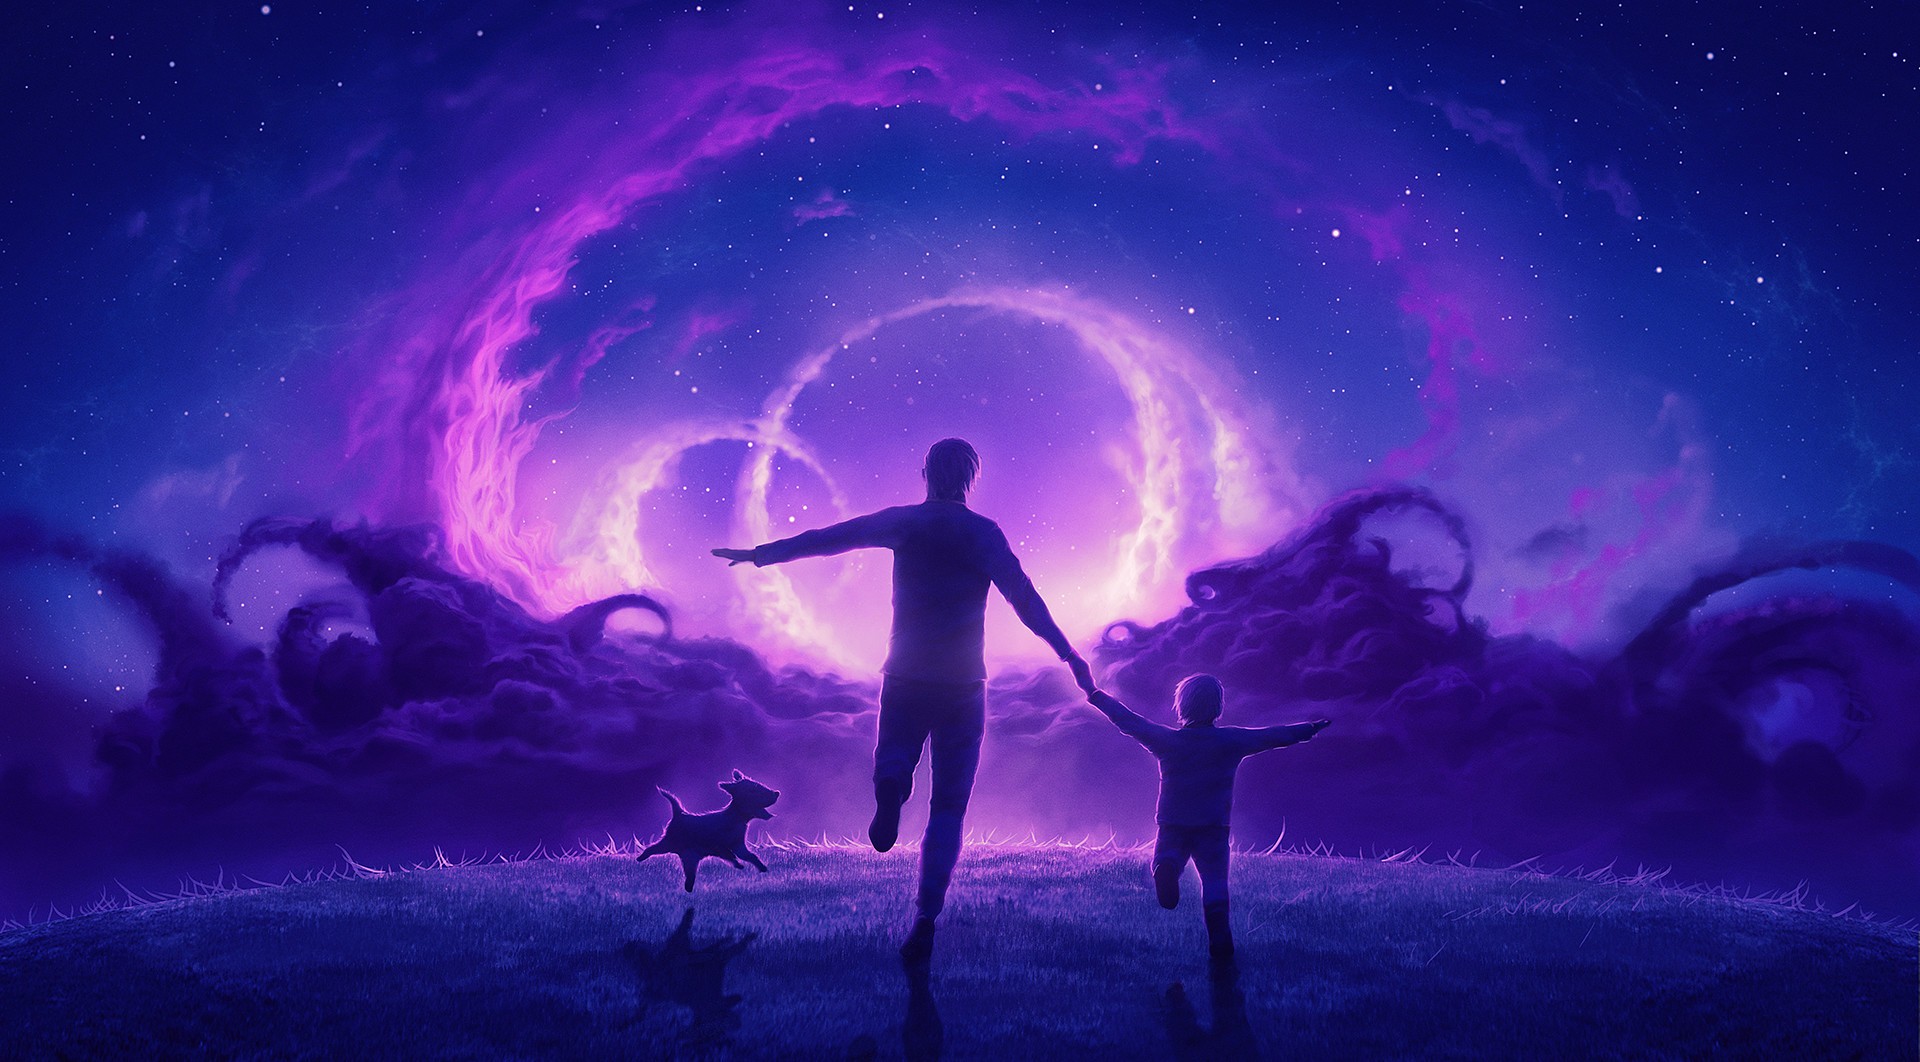 General 1920x1062 peace Heaven and Hell family sky dog stars night lights grass purple digital art